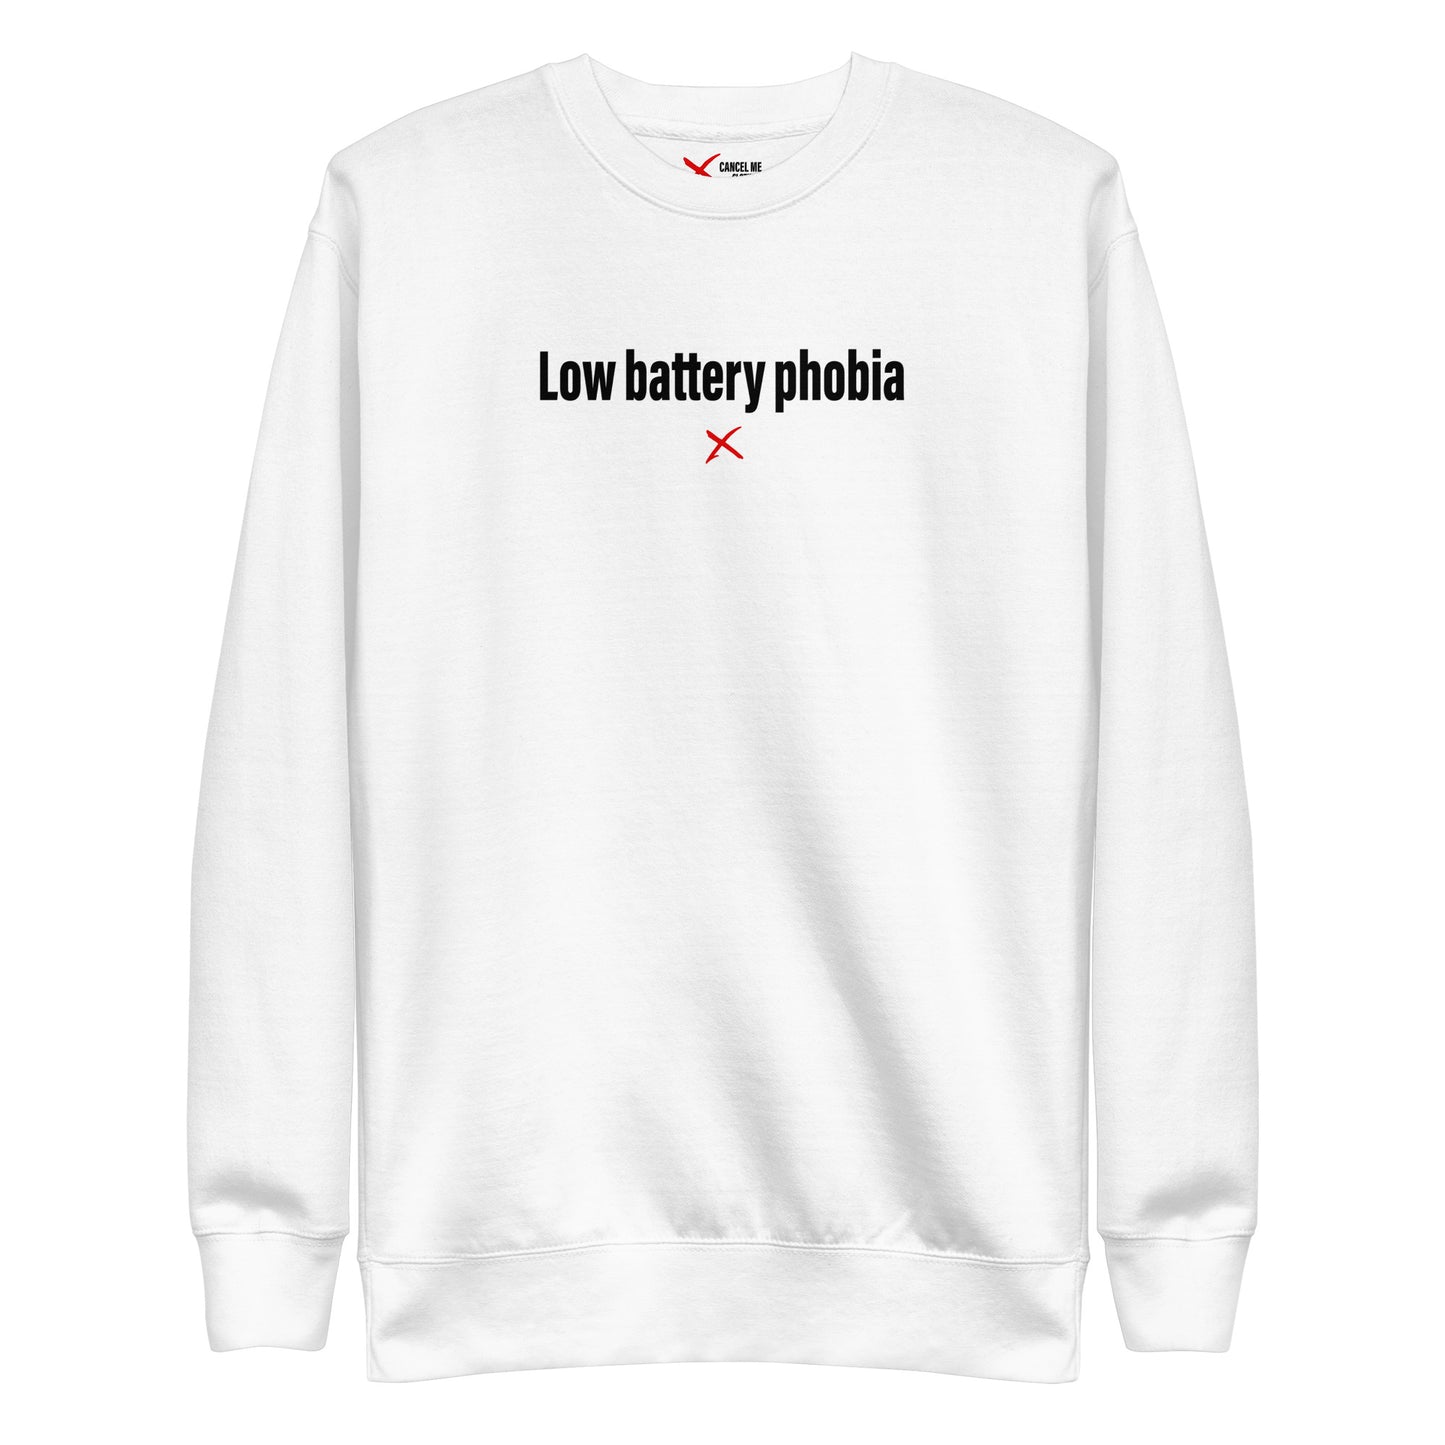 Low battery phobia - Sweatshirt